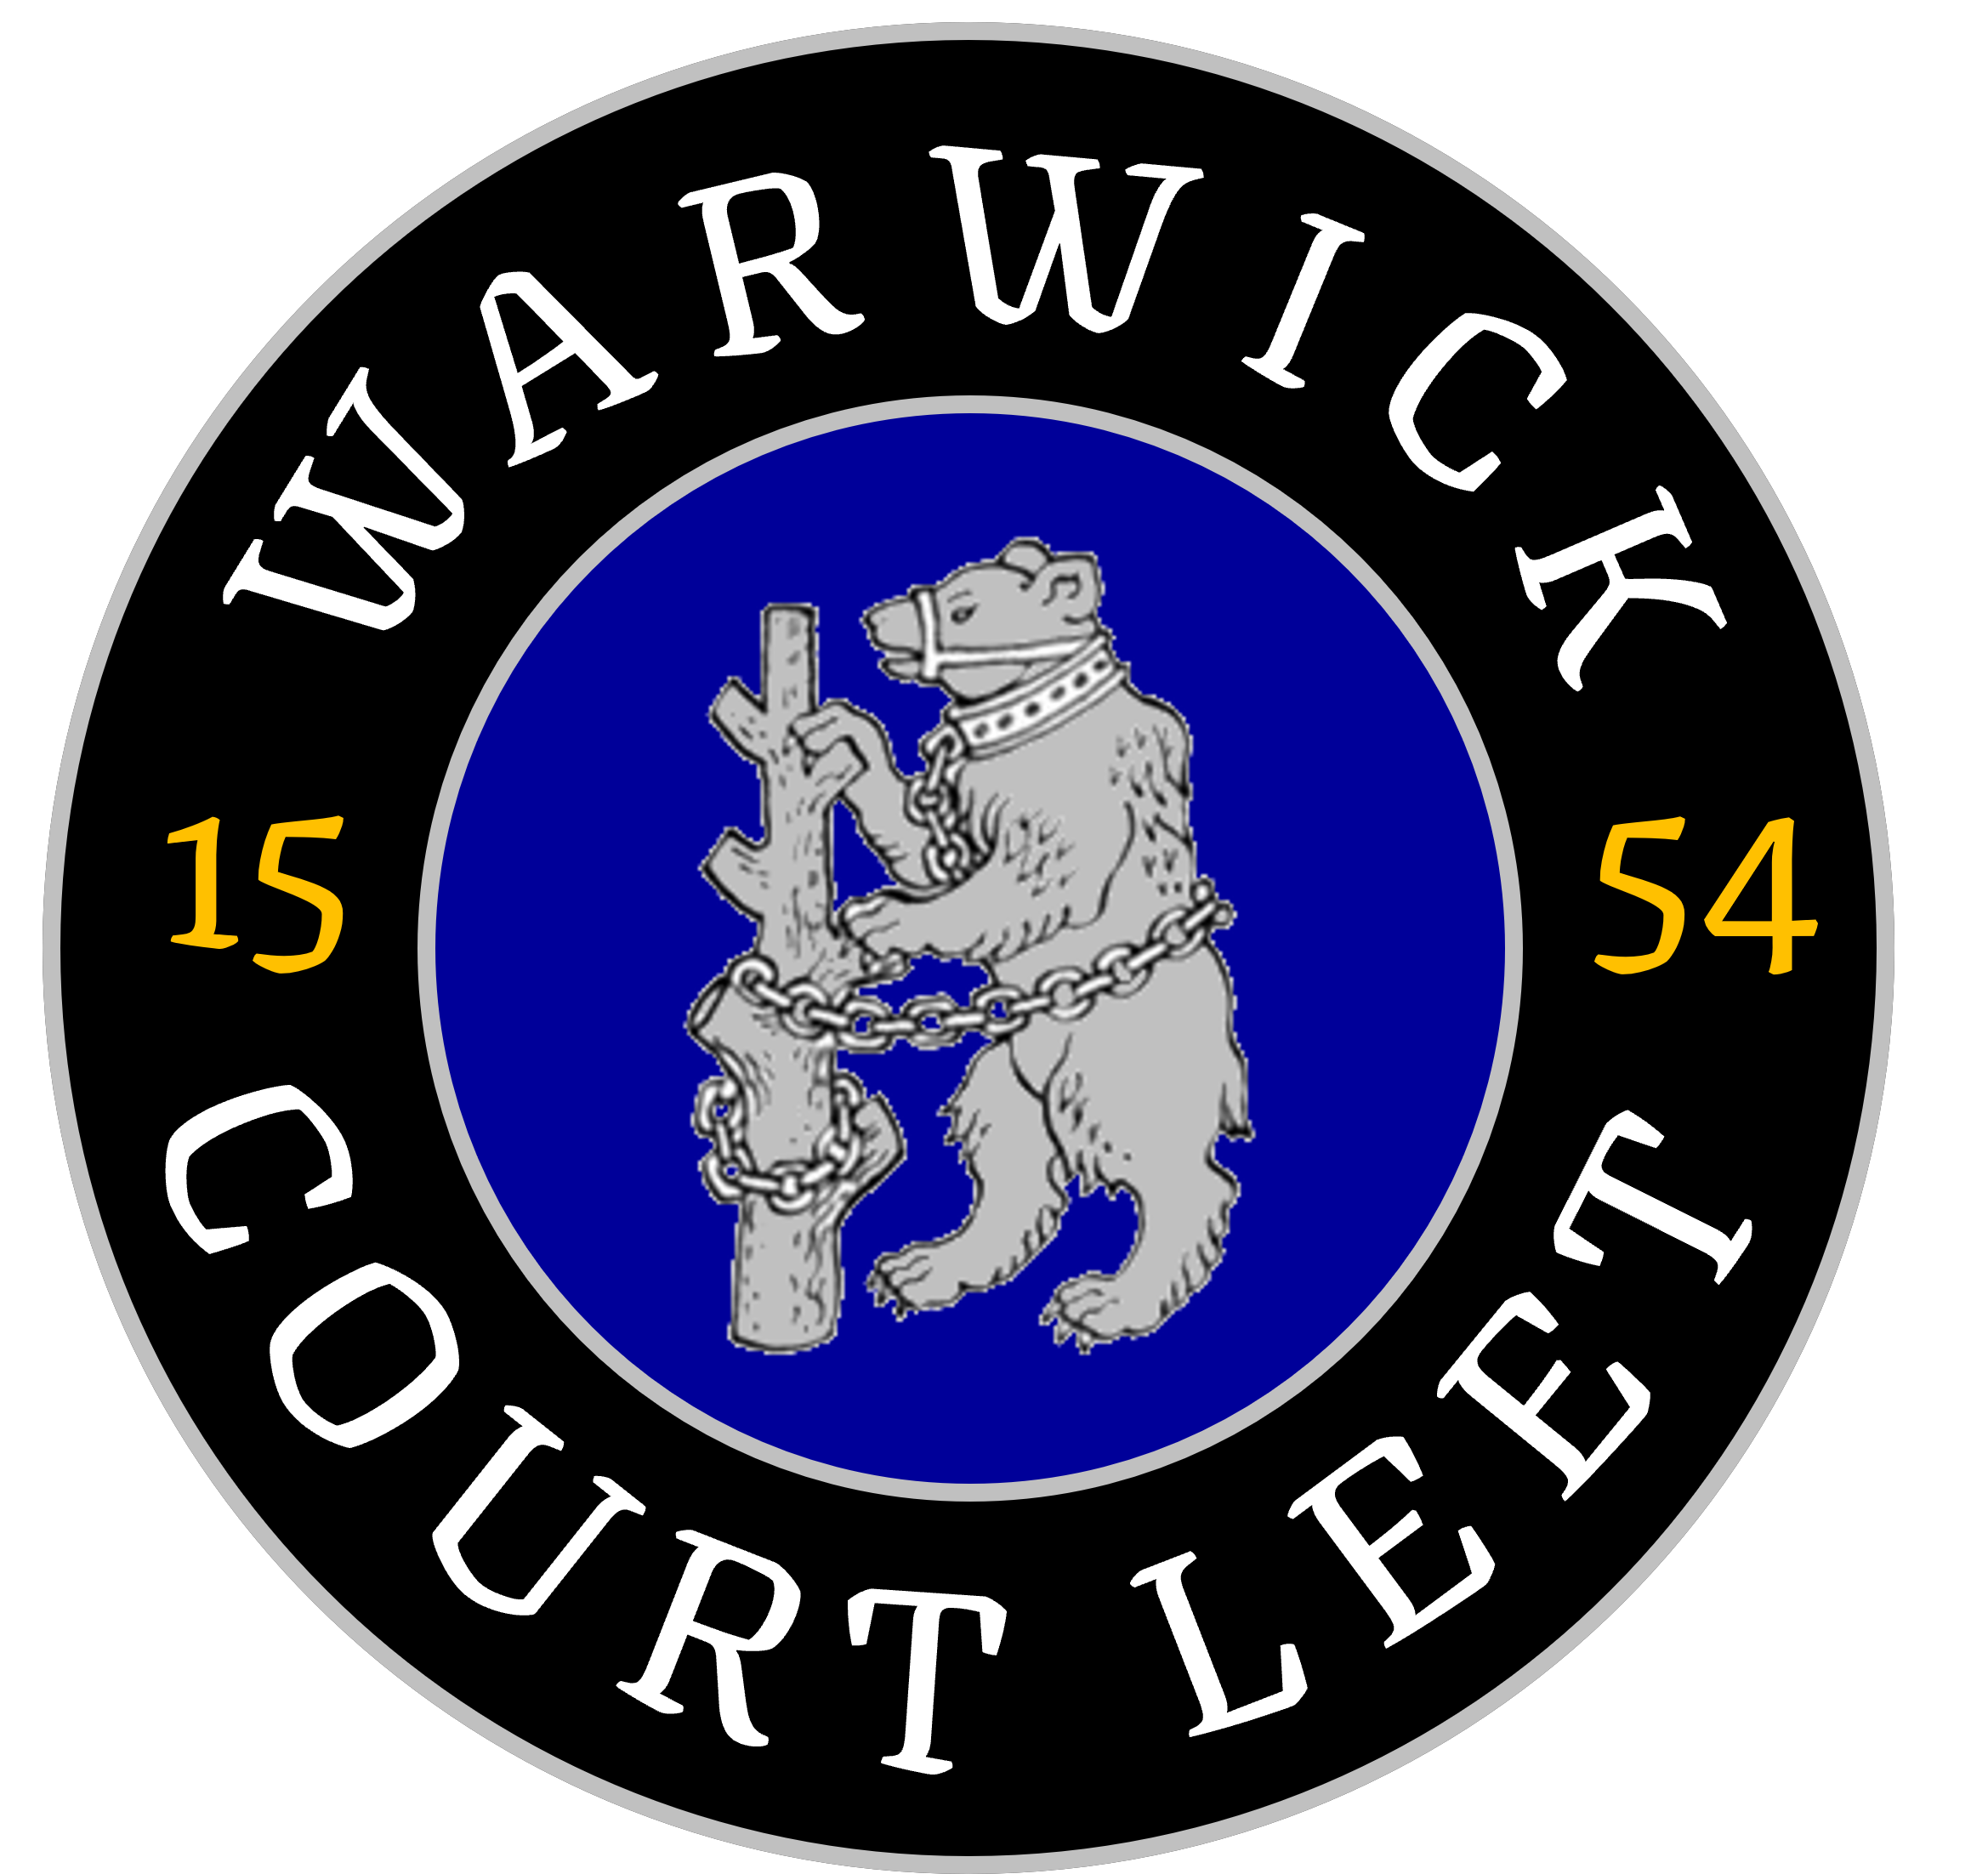 Warwick Court Leet